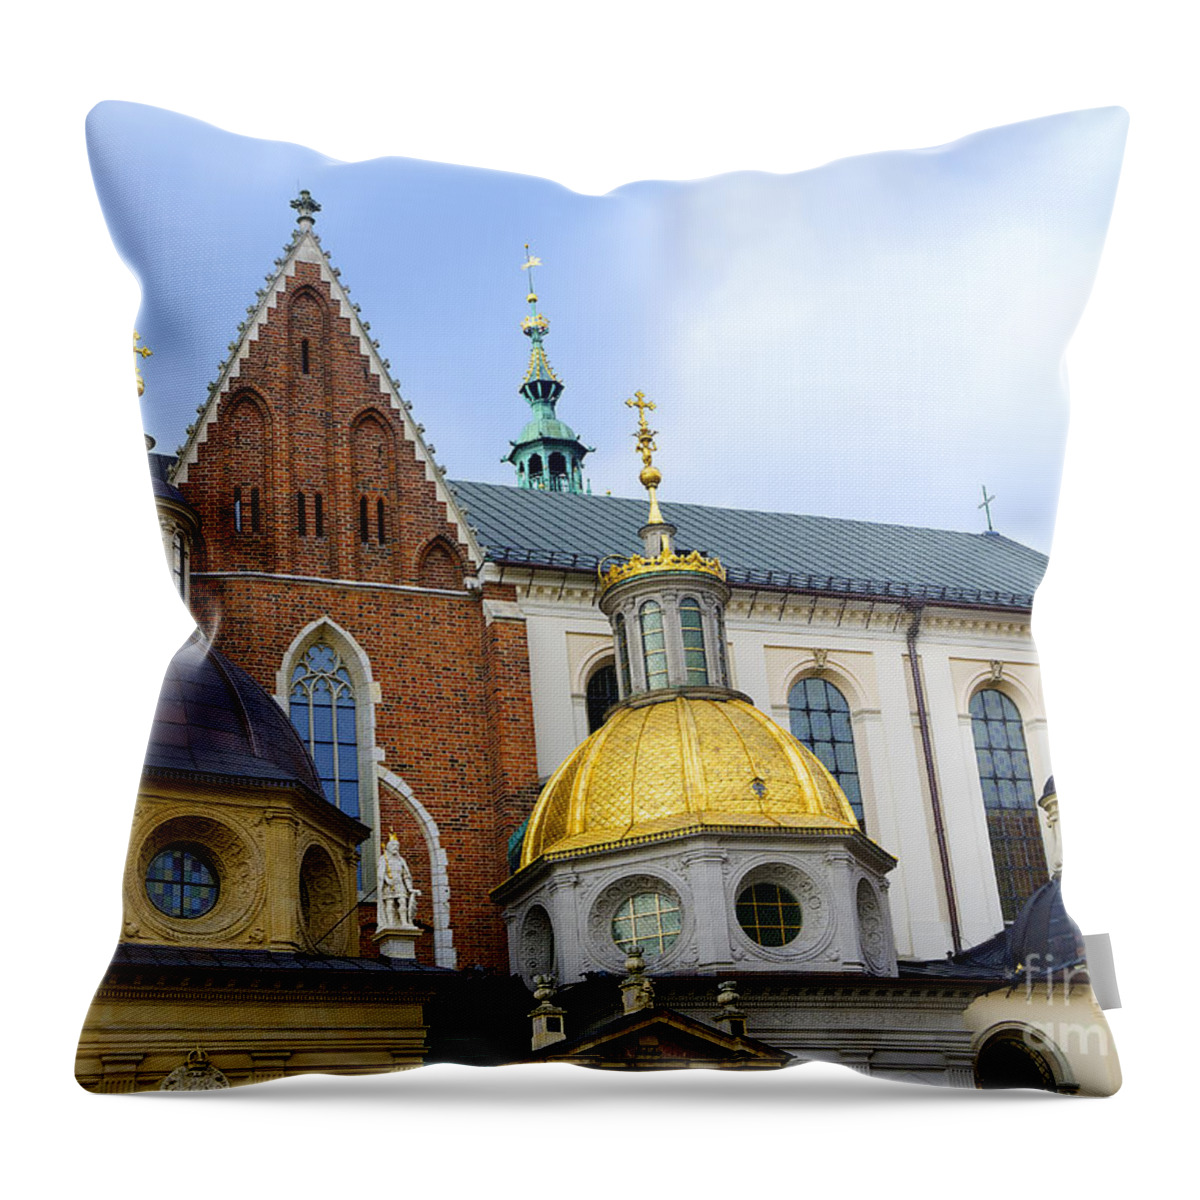 Krakow Throw Pillow featuring the photograph Golden Dome by Brenda Kean